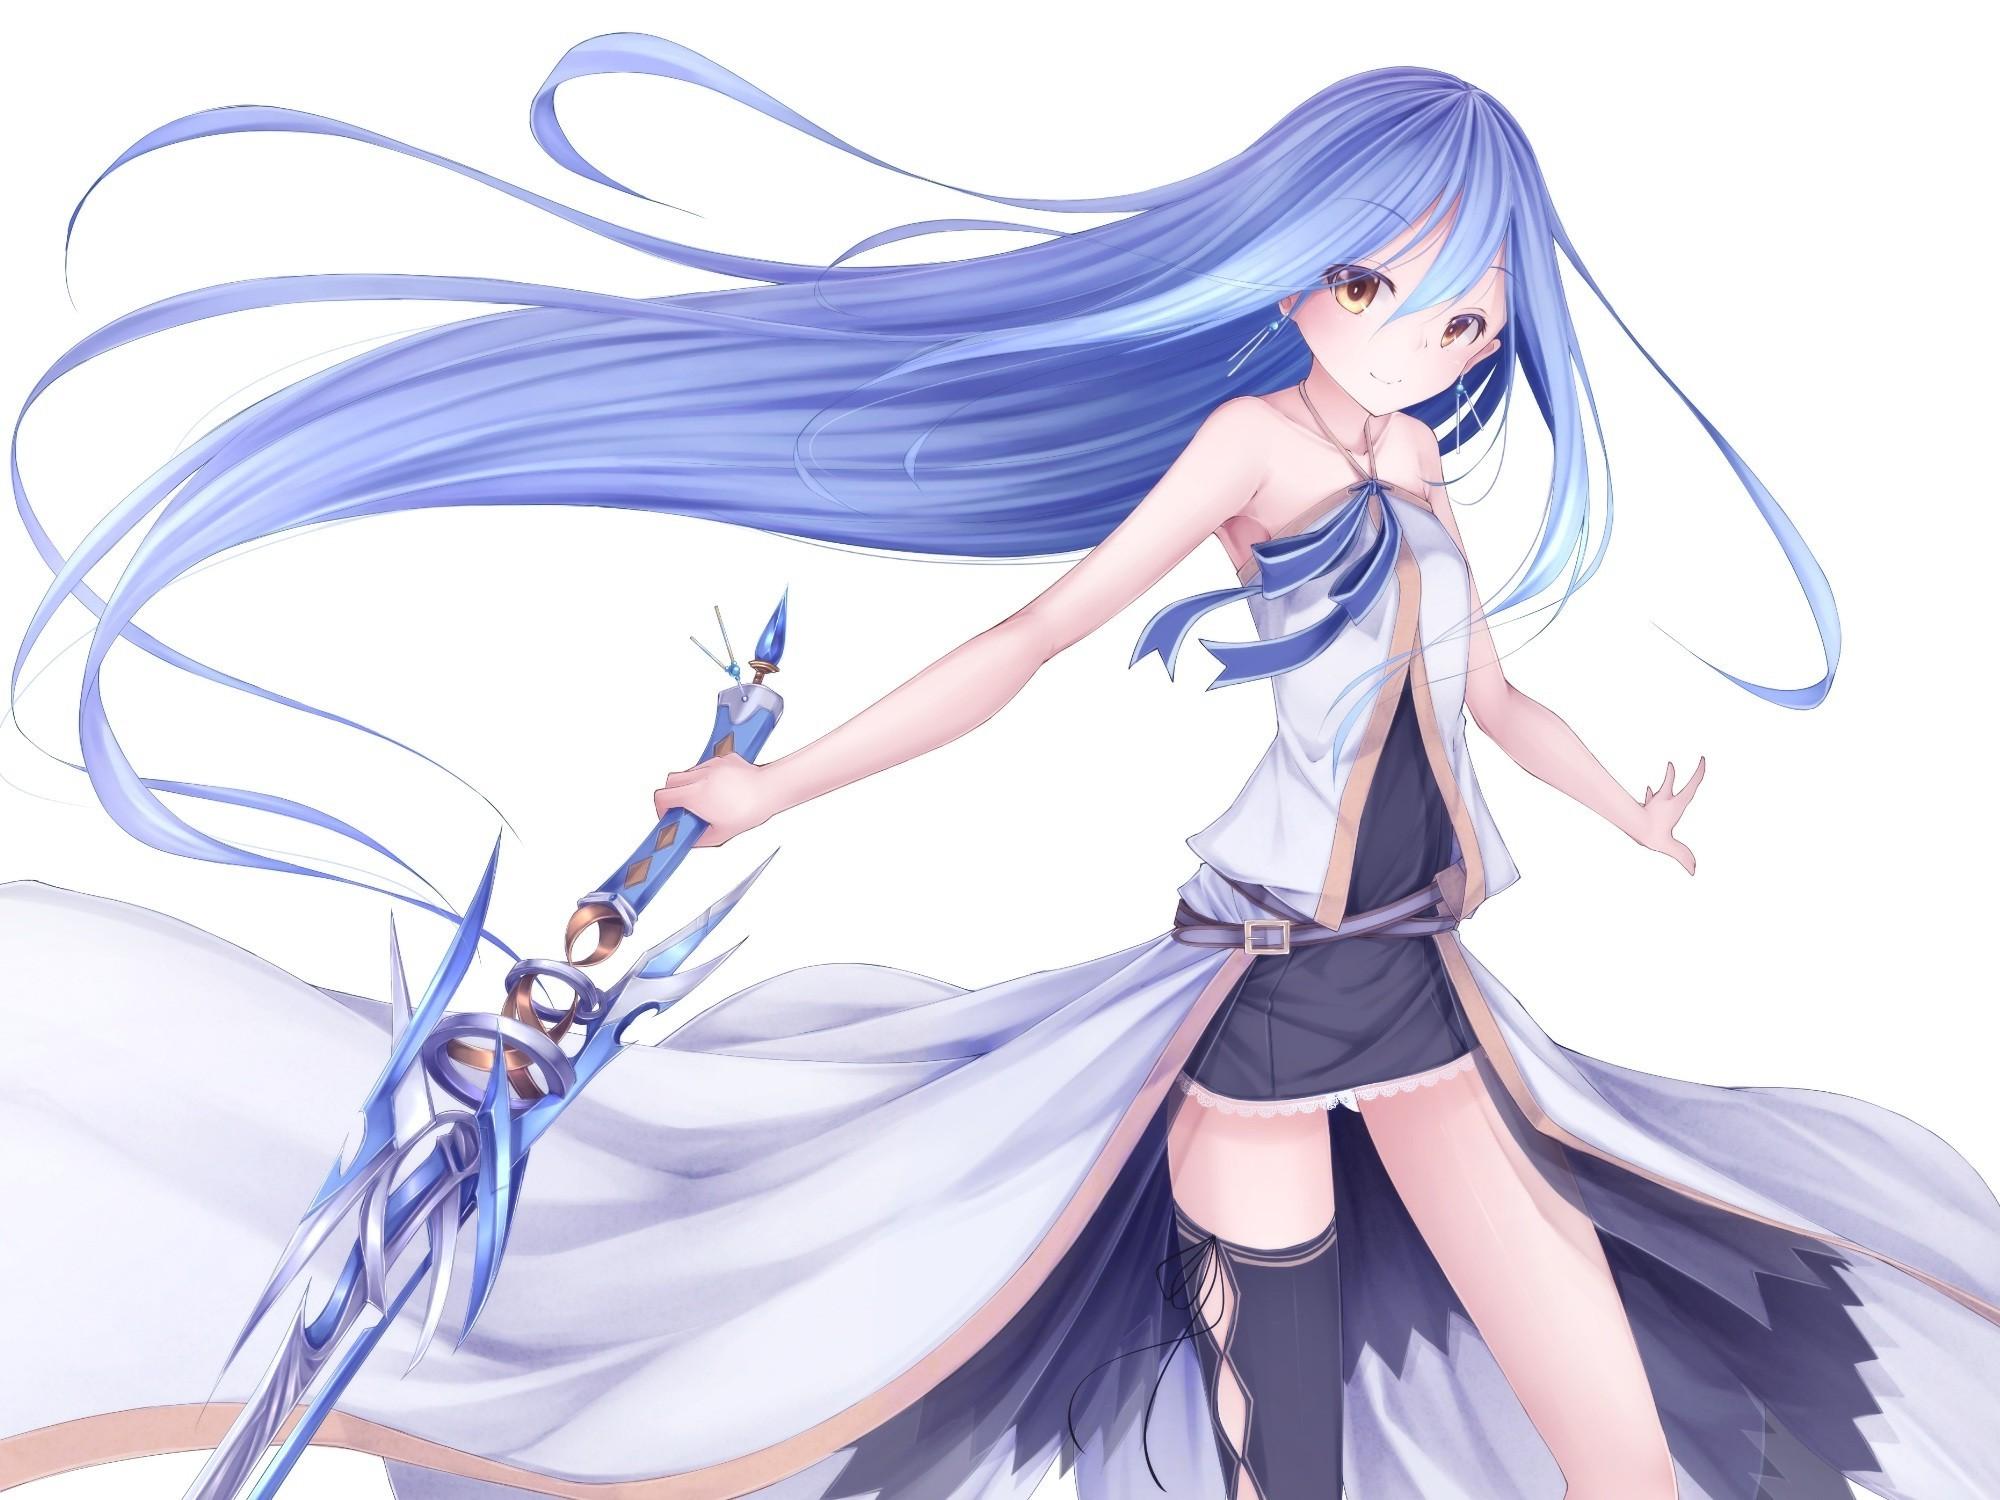 5. "Blue Hair Anime Hairstyle Ideas" - wide 7